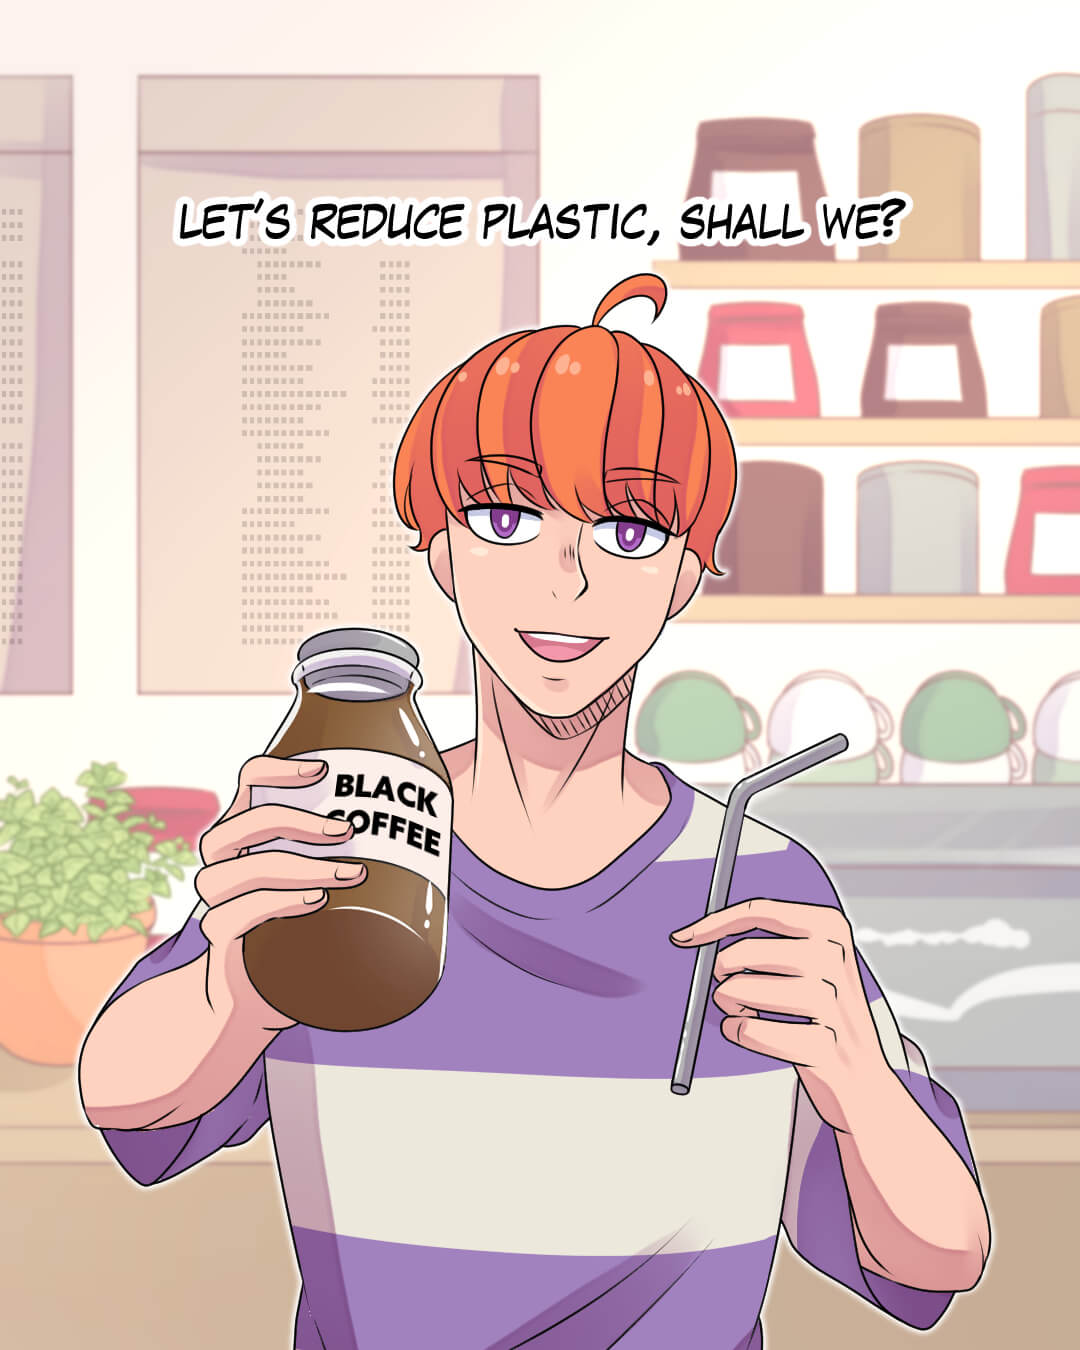 Let's Reduce Plastic Together!